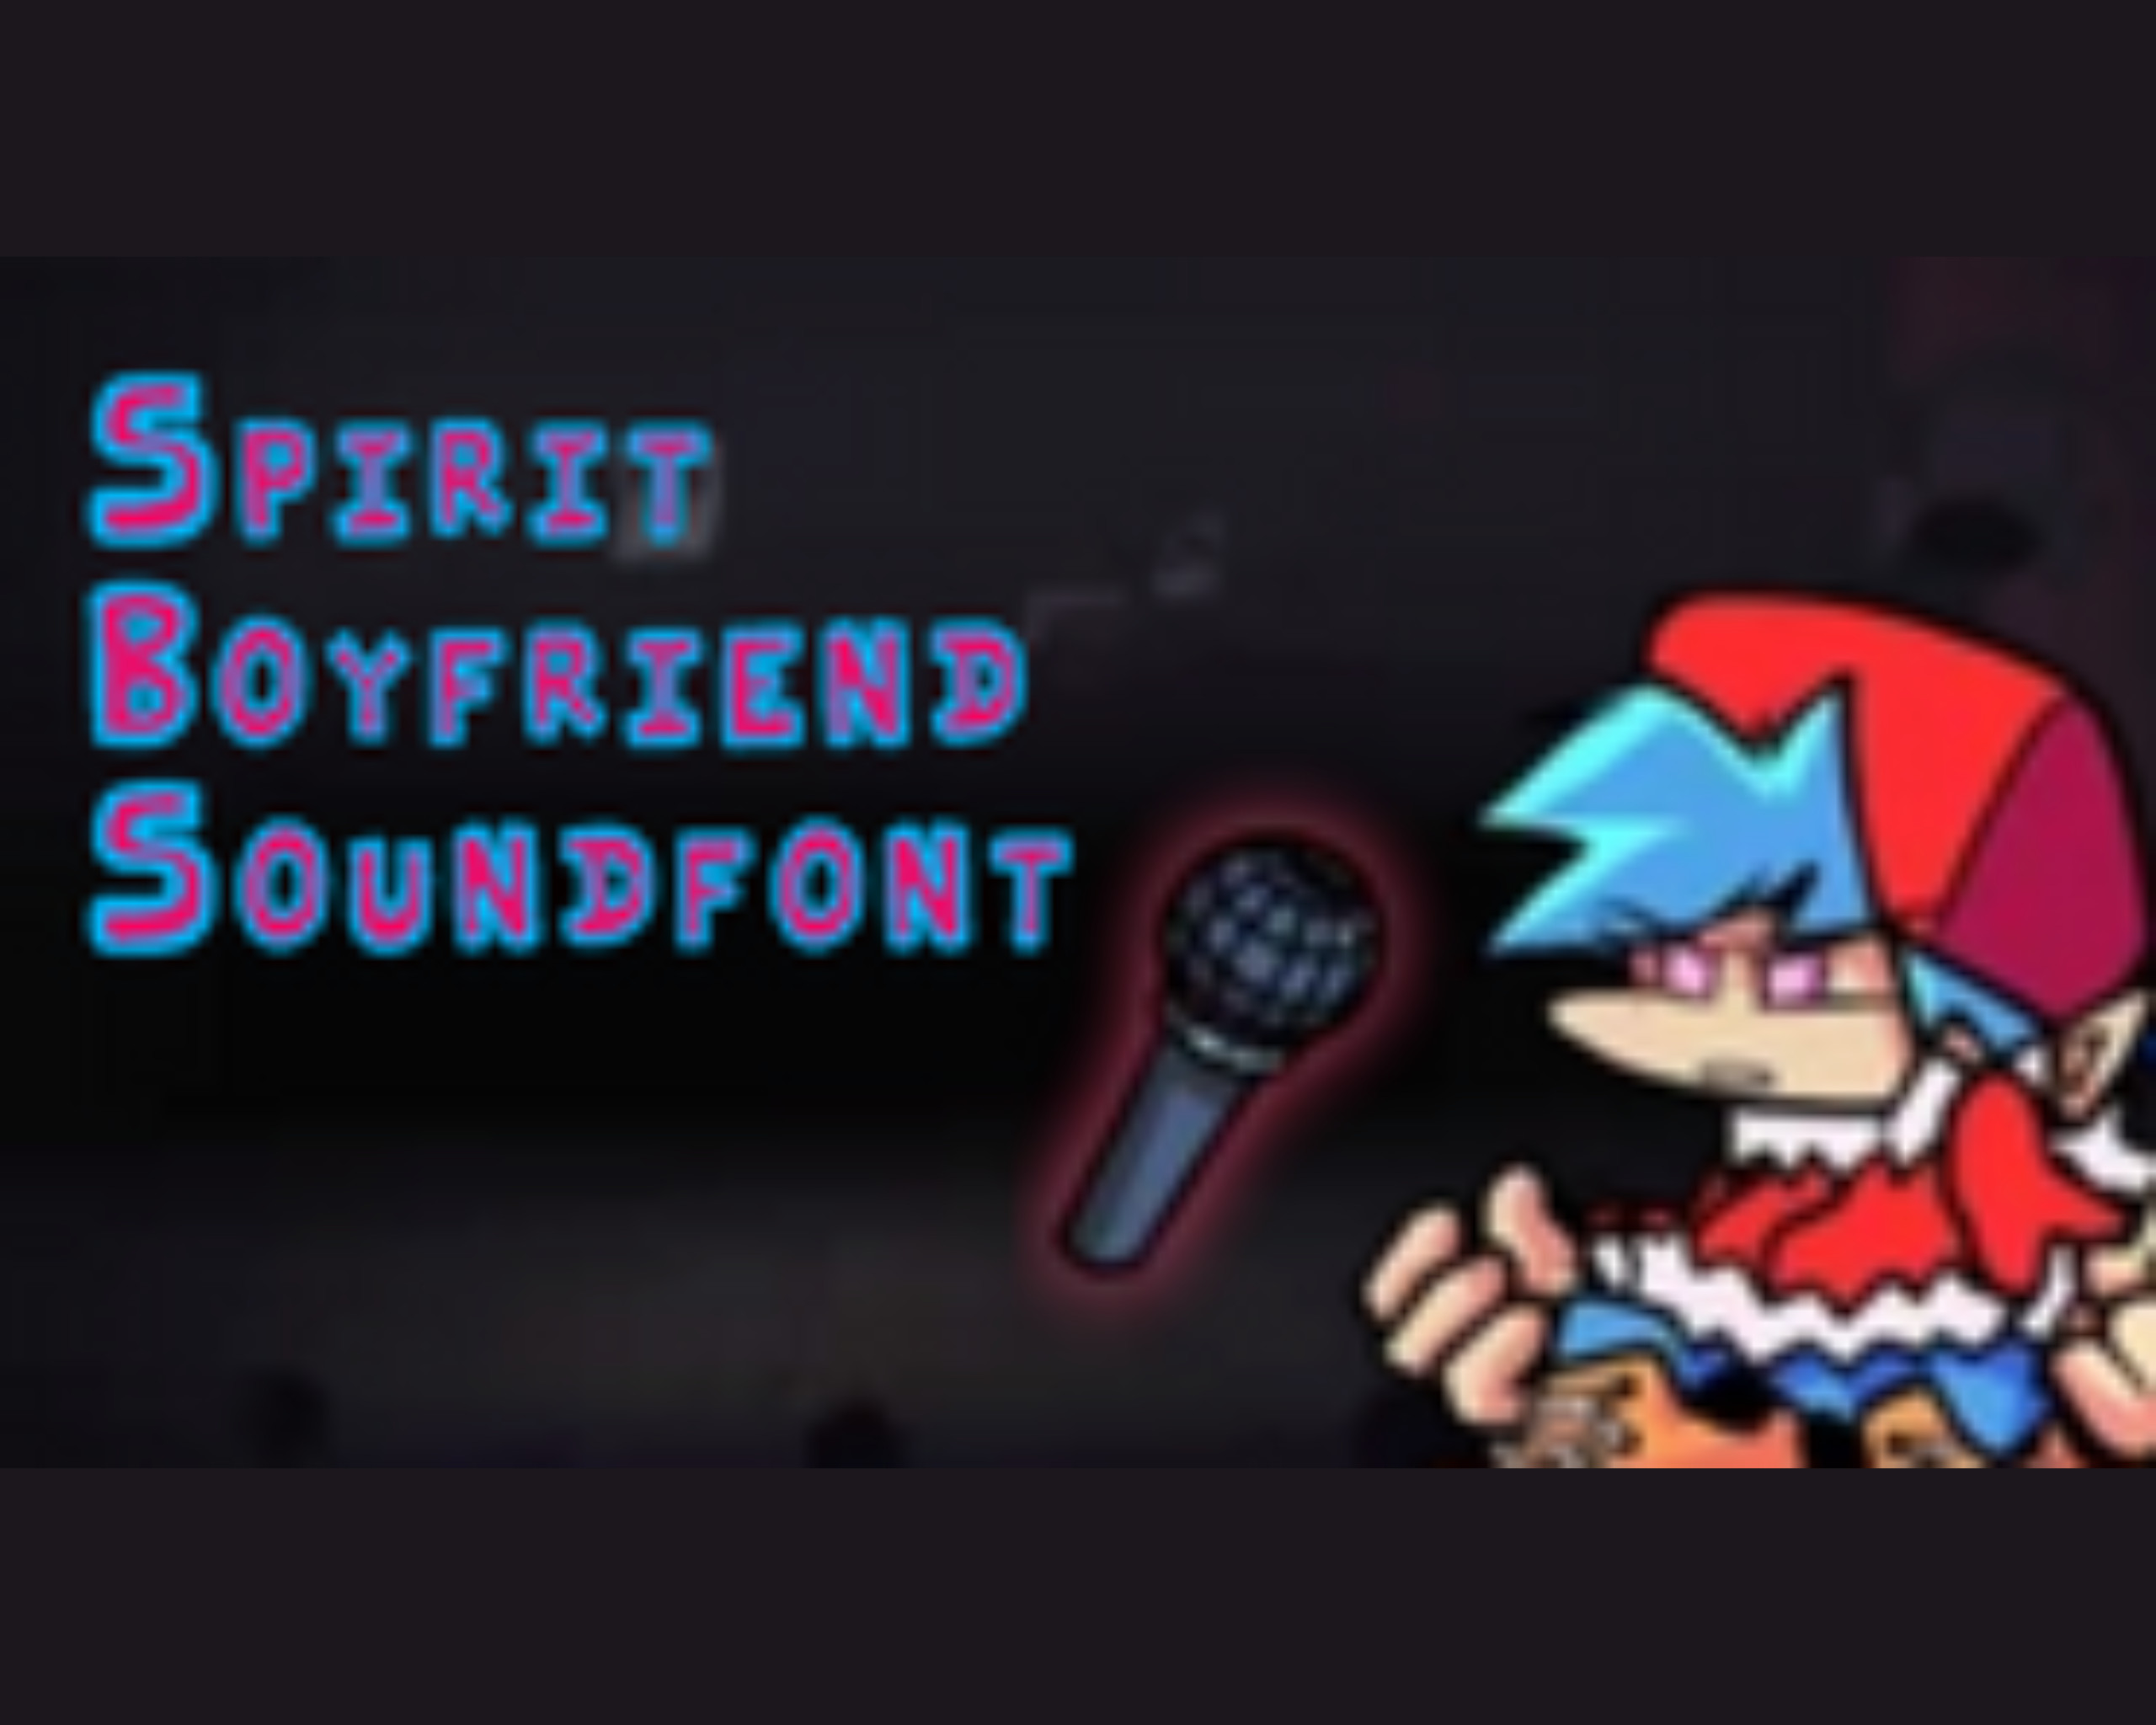 Spirit Boyfriend Soundfont! [Friday Night Funkin'] [Modding Tools]